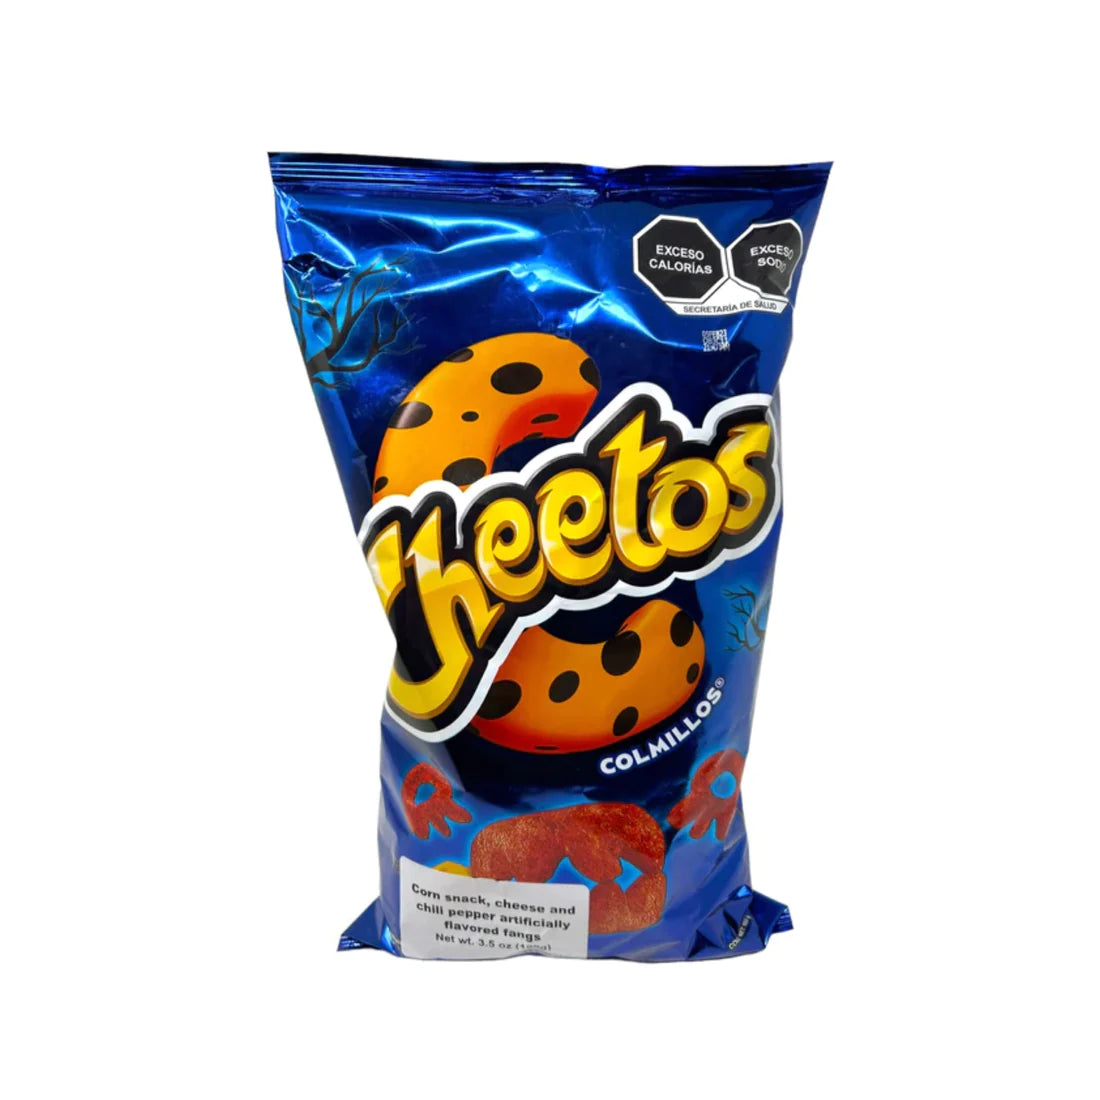 Cheetos Colmillos- Sabritas